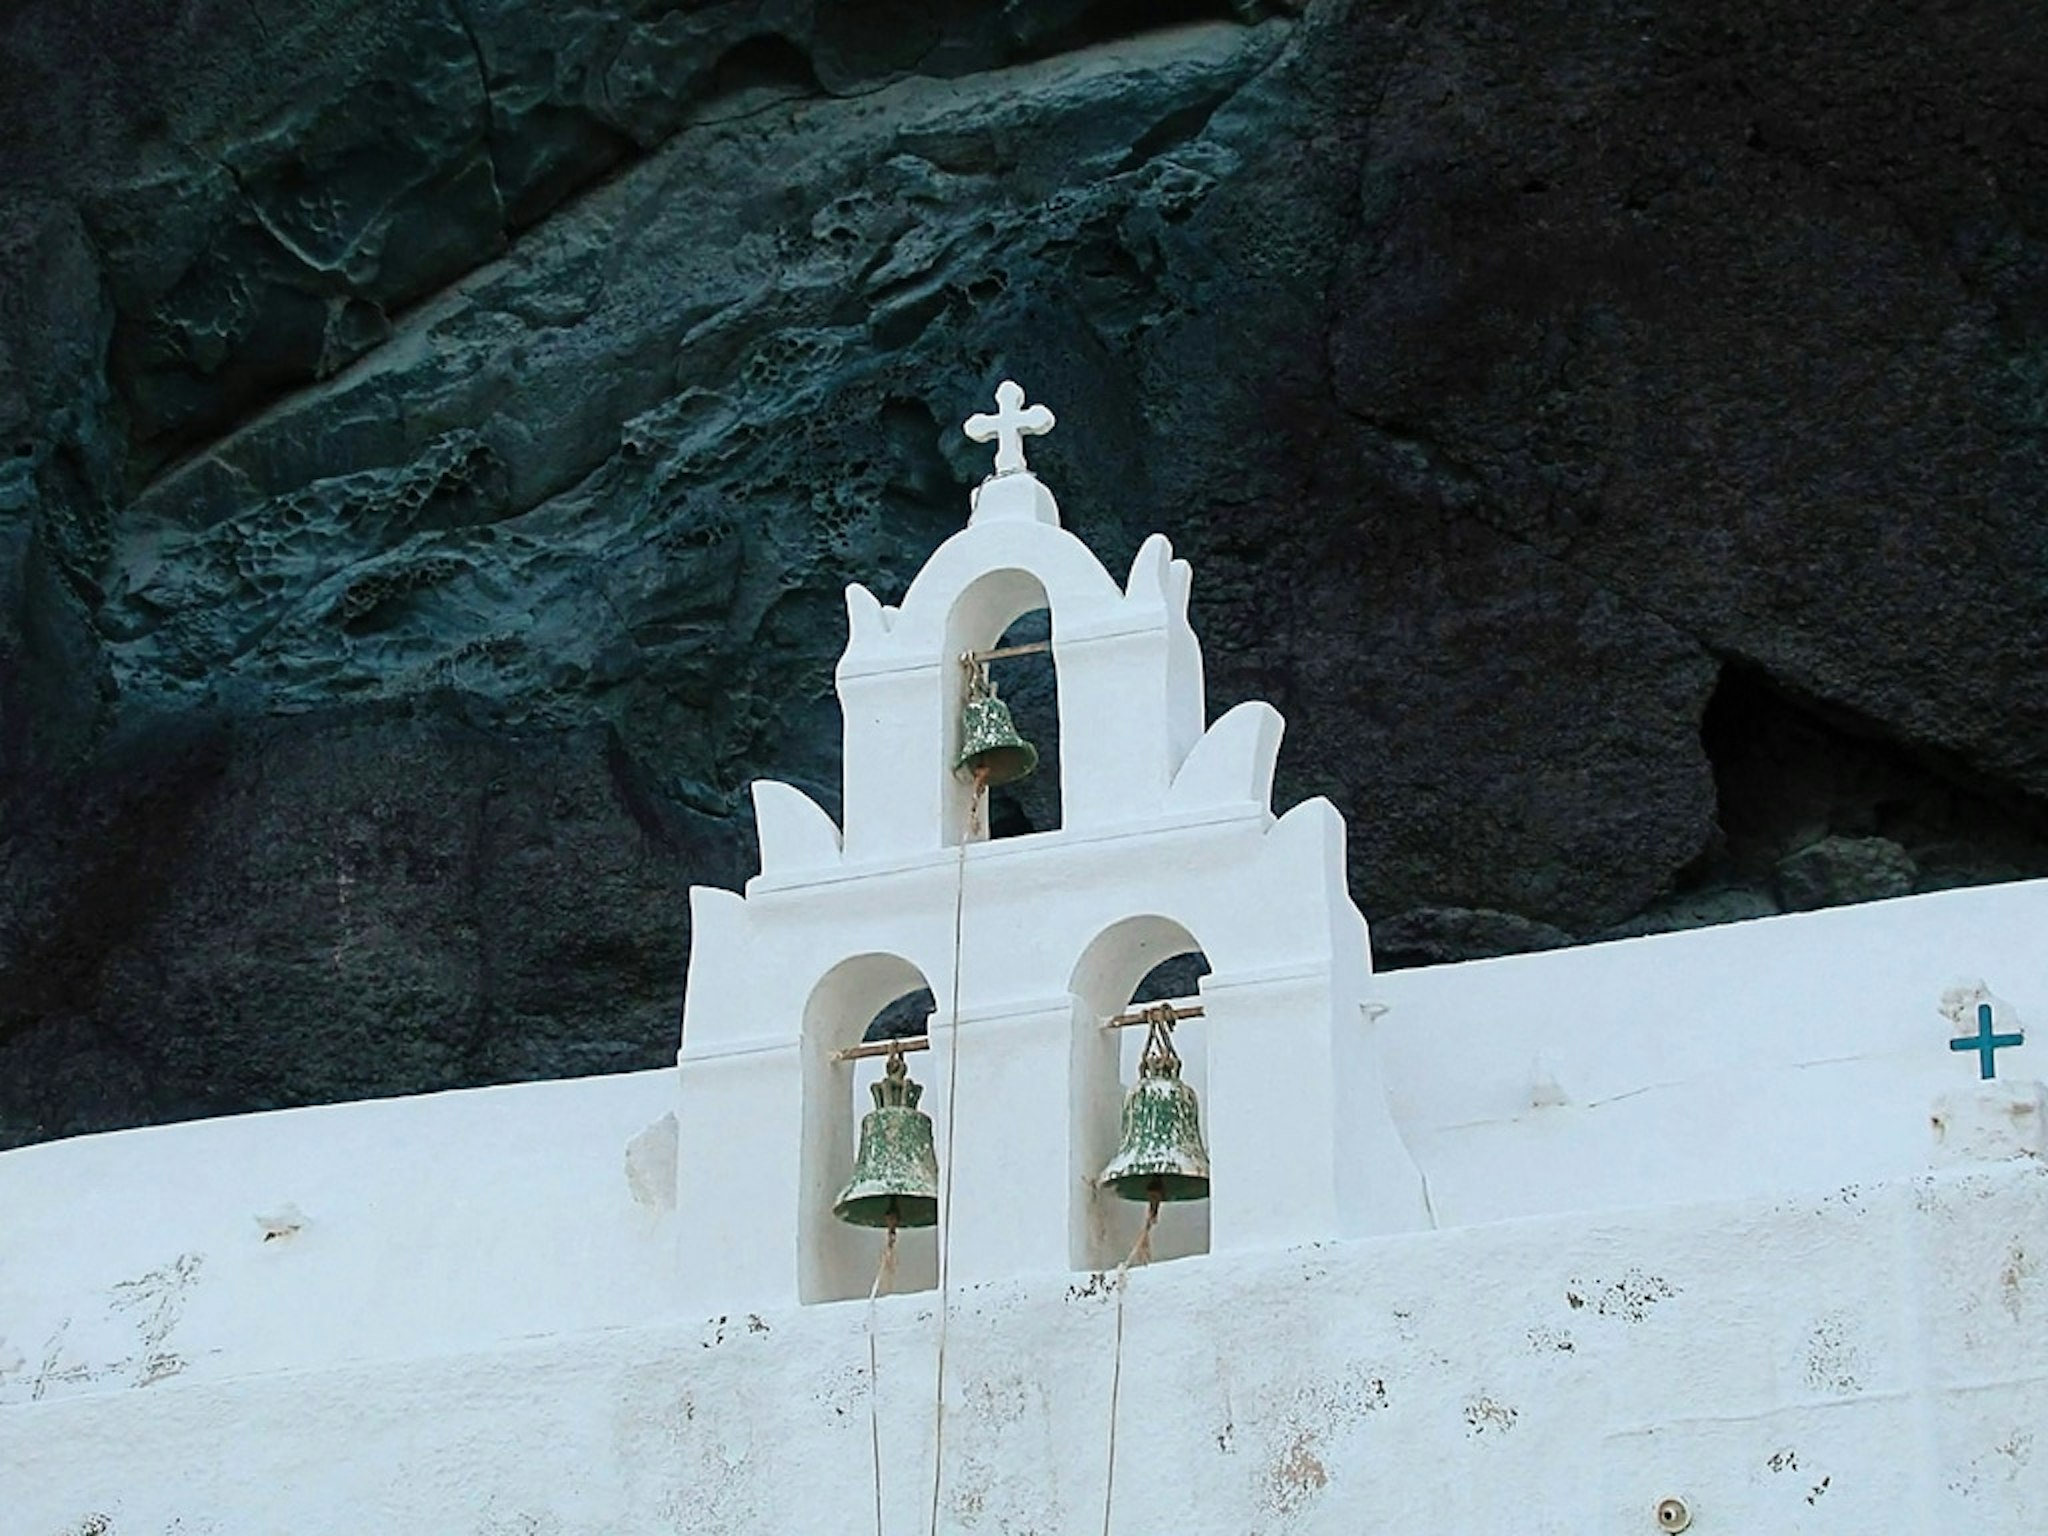 Santorini's bells